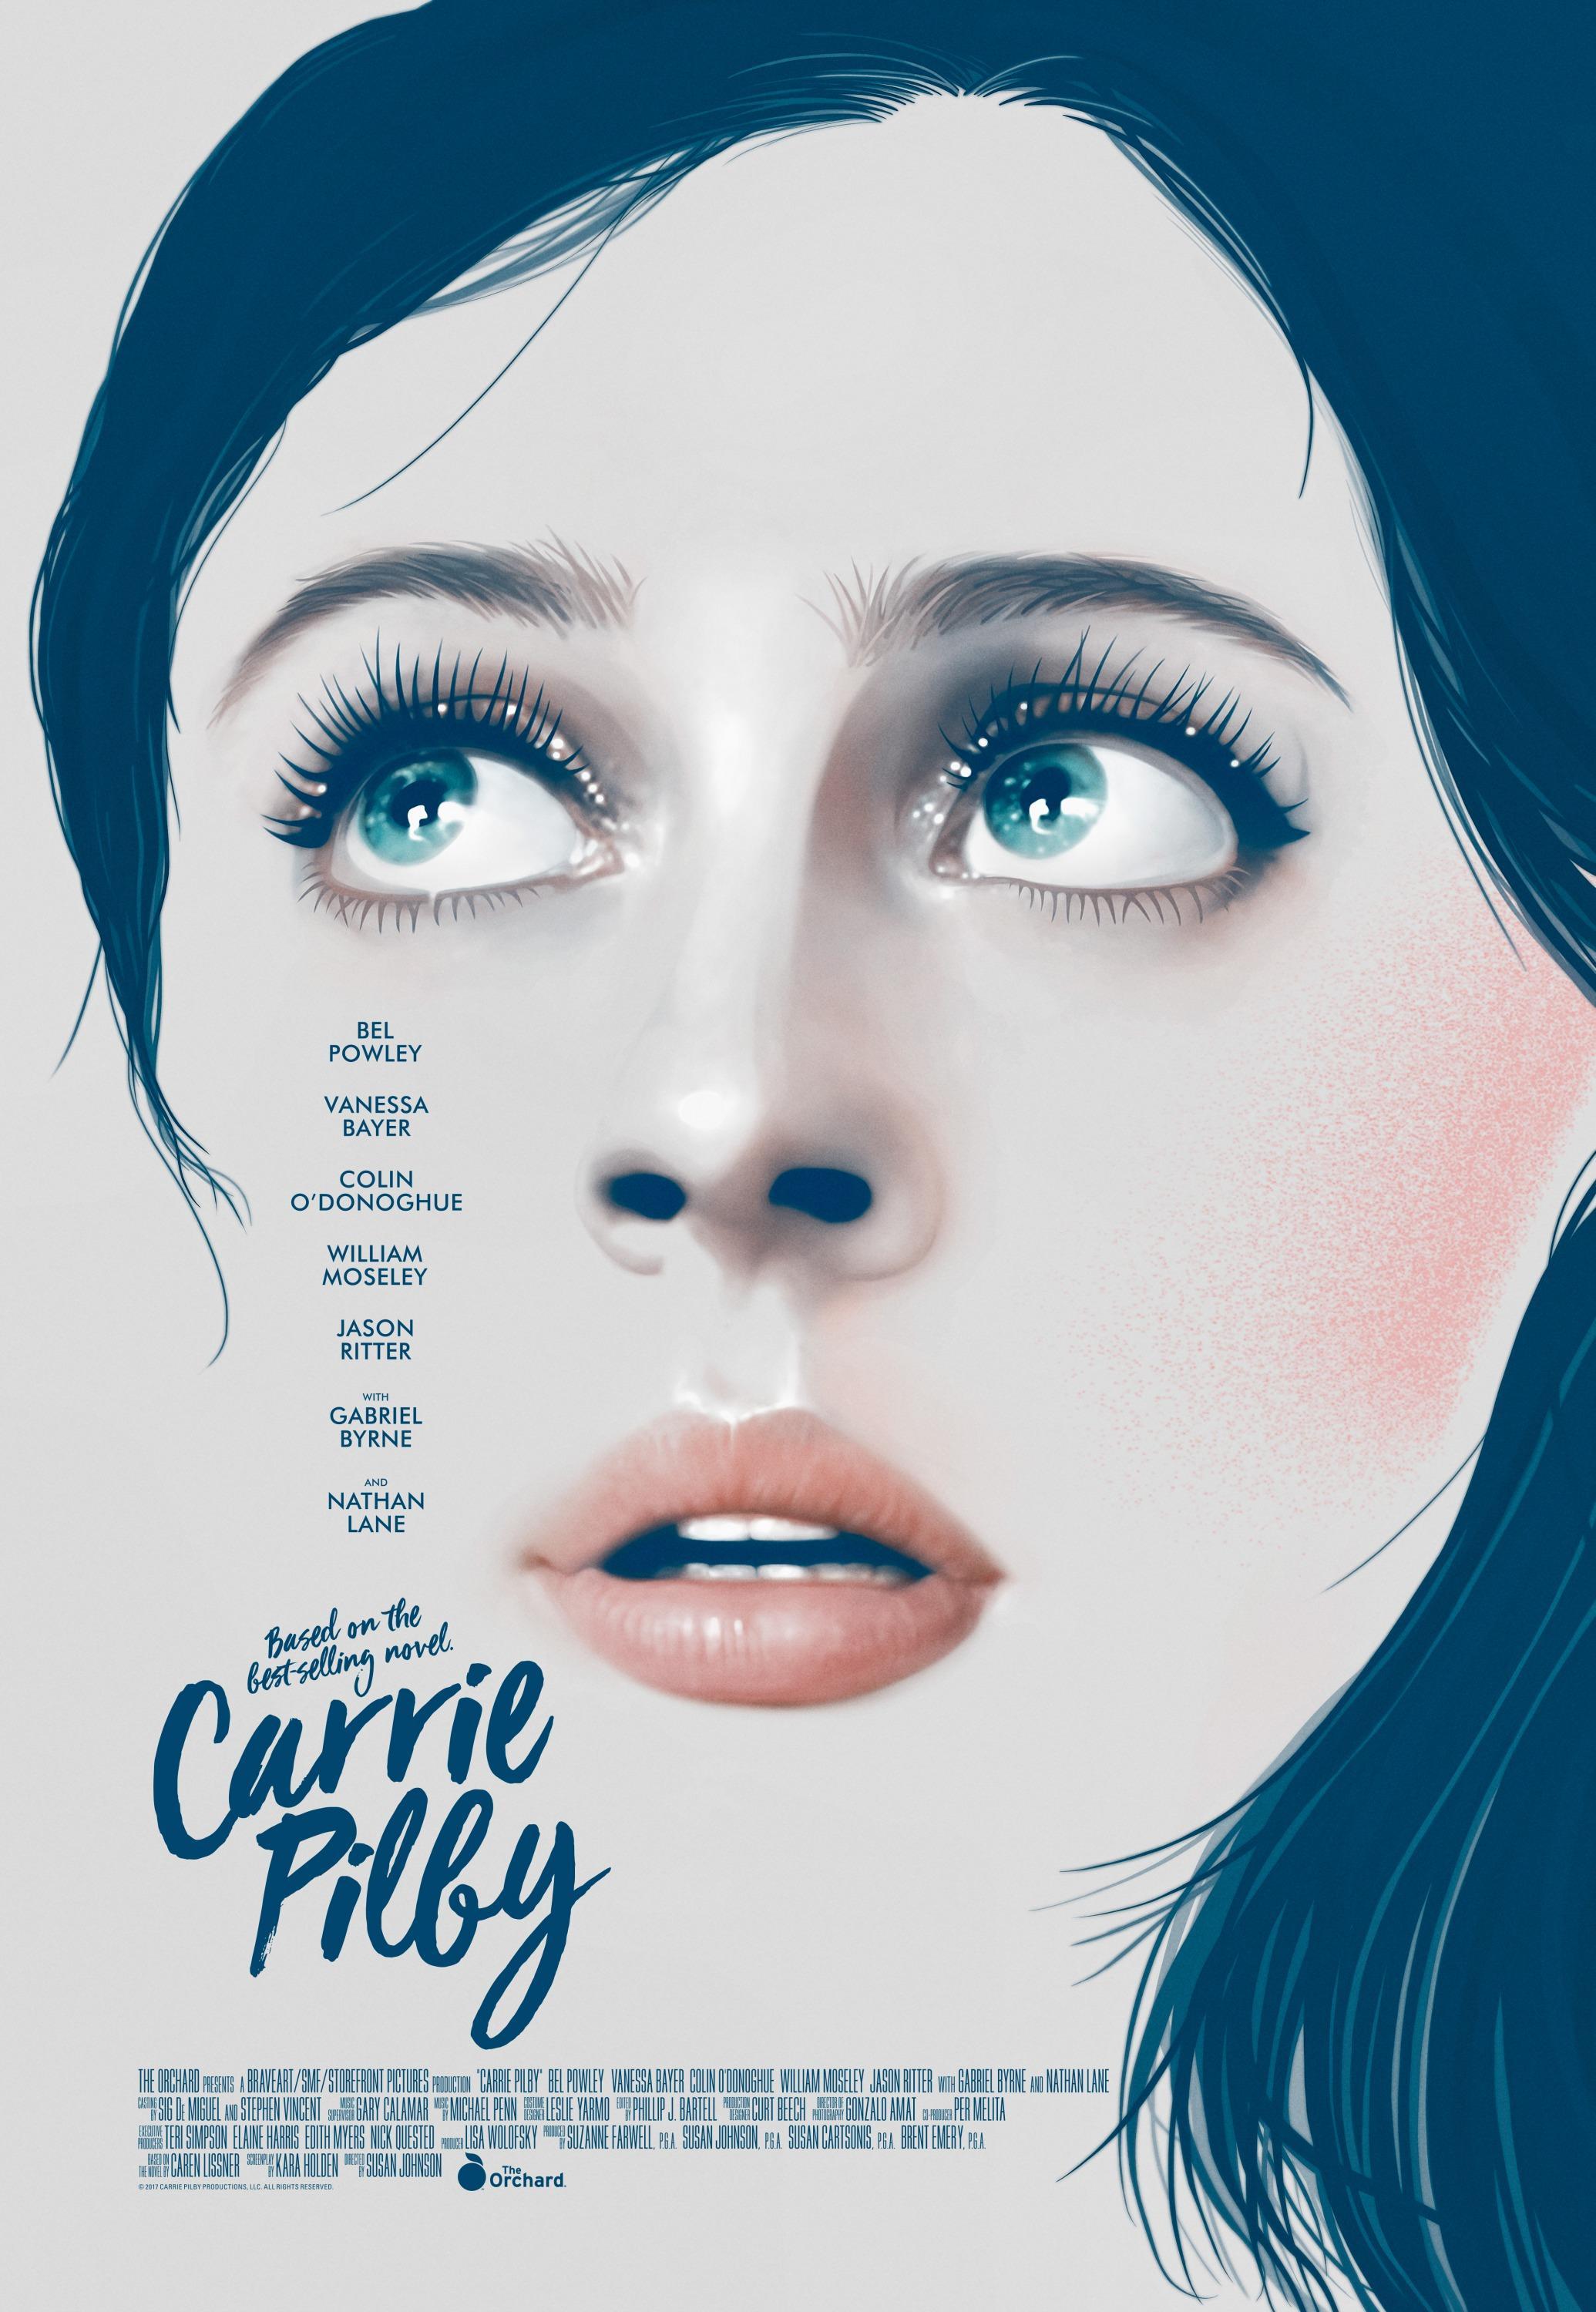 Постер фильма Кэрри Пилби | Carrie Pilby